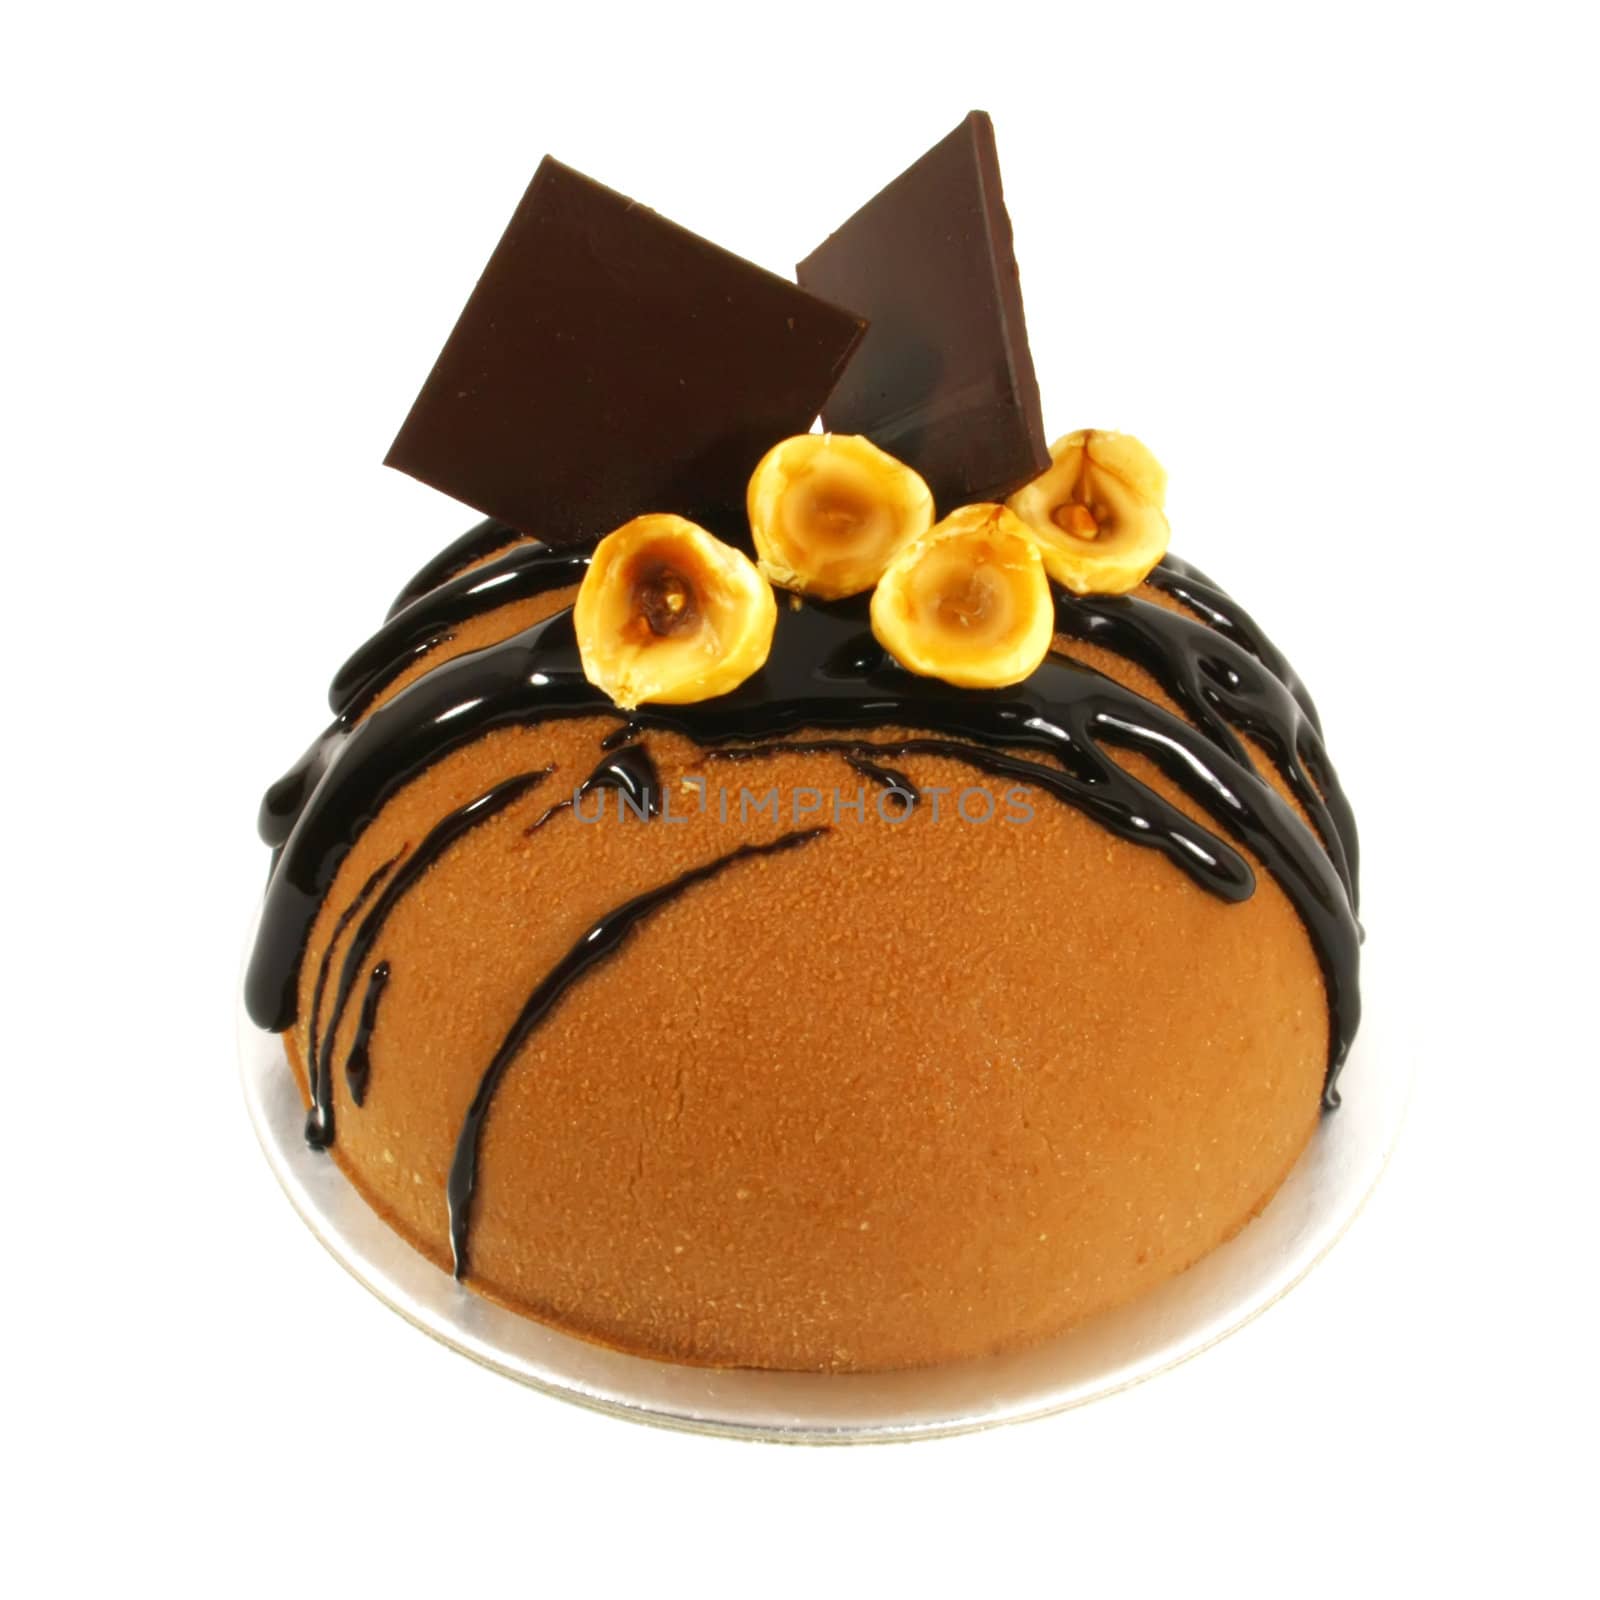 Fancy Chocolate Cake by kentoh